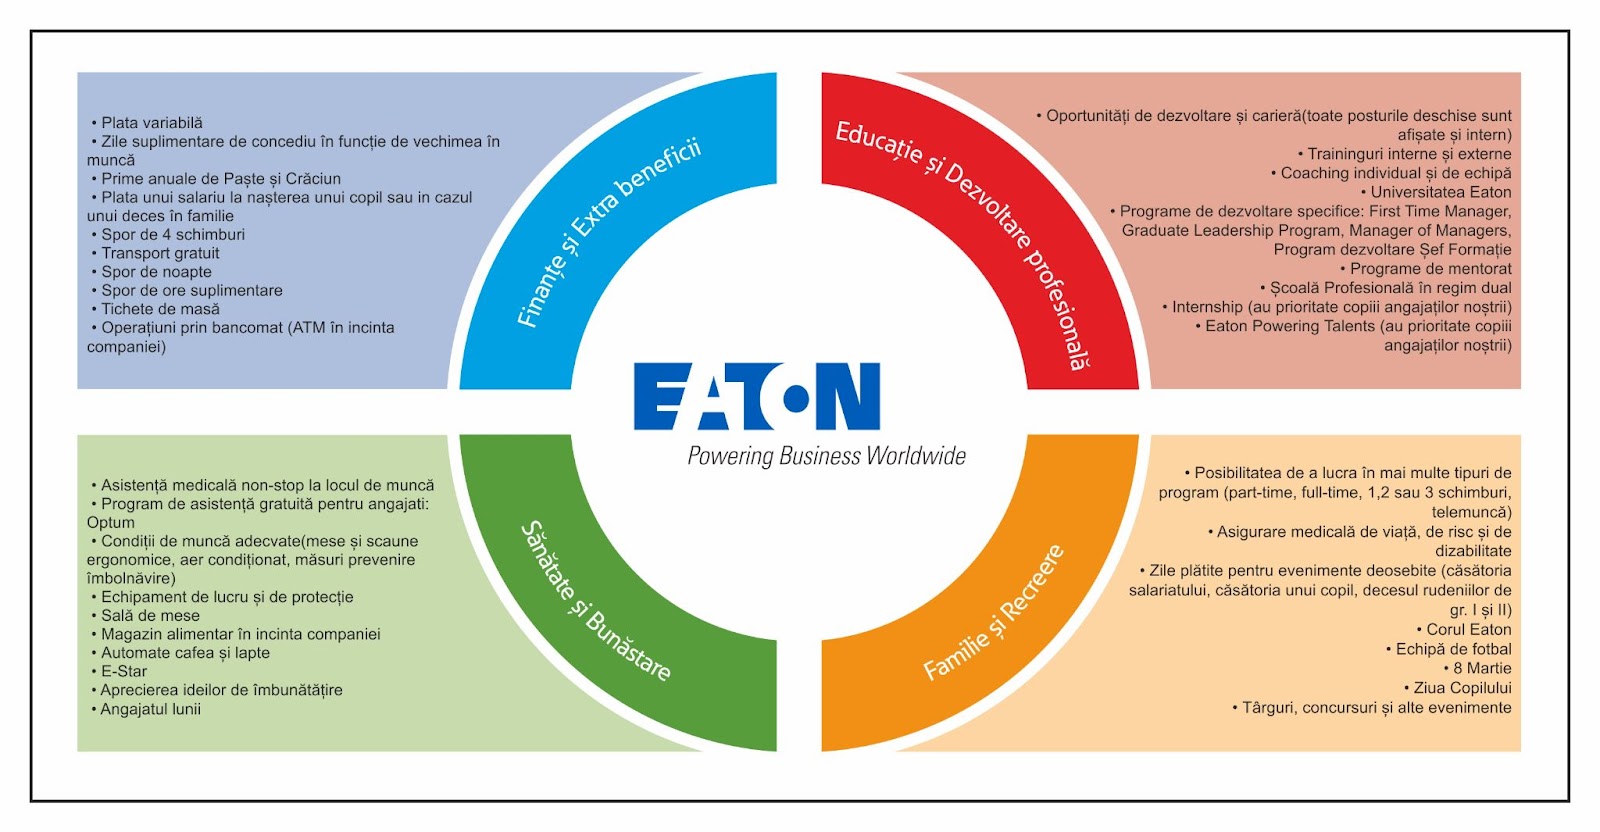 الحيض جشع صيغة الامر  litAF Marketing - EATON - second largest employer in the county